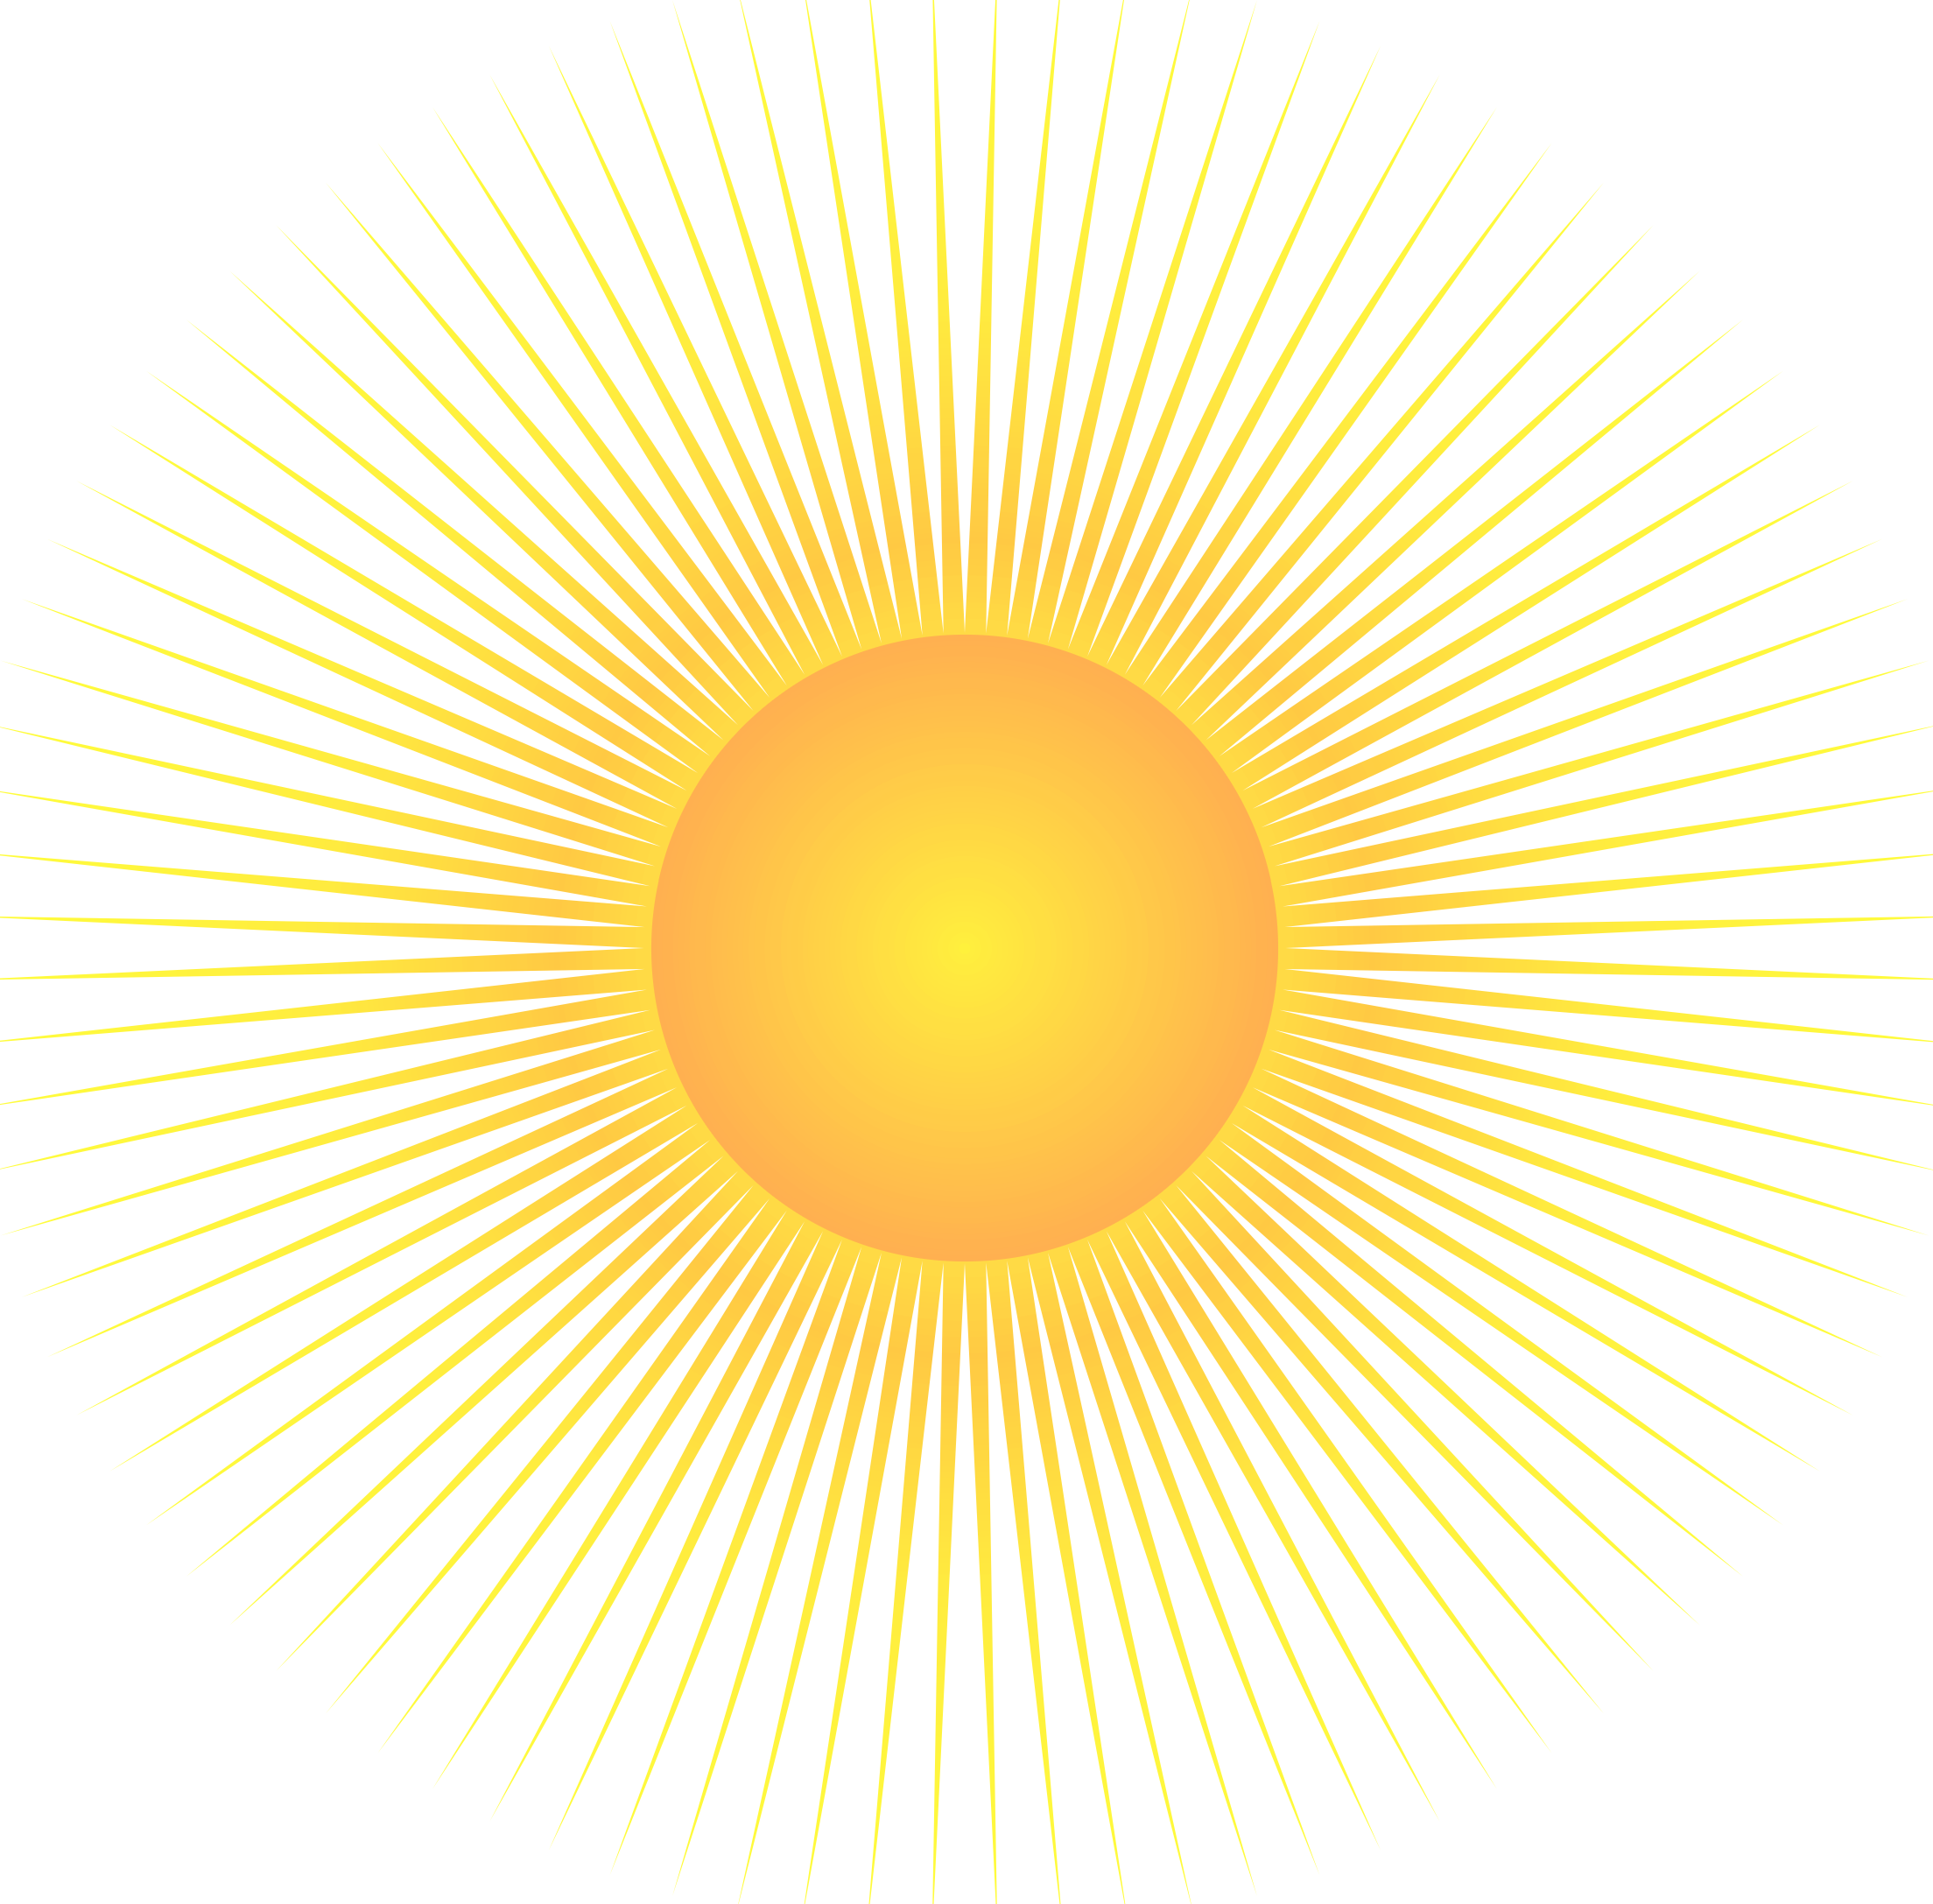 Novel Corona Virus COVID 19 sun light rays treatment cure USA President Donald Trump herbal ashtanga yoga hatha raj pranayama asana mudra bhakti mantra meditation prevention remedies symptoms 